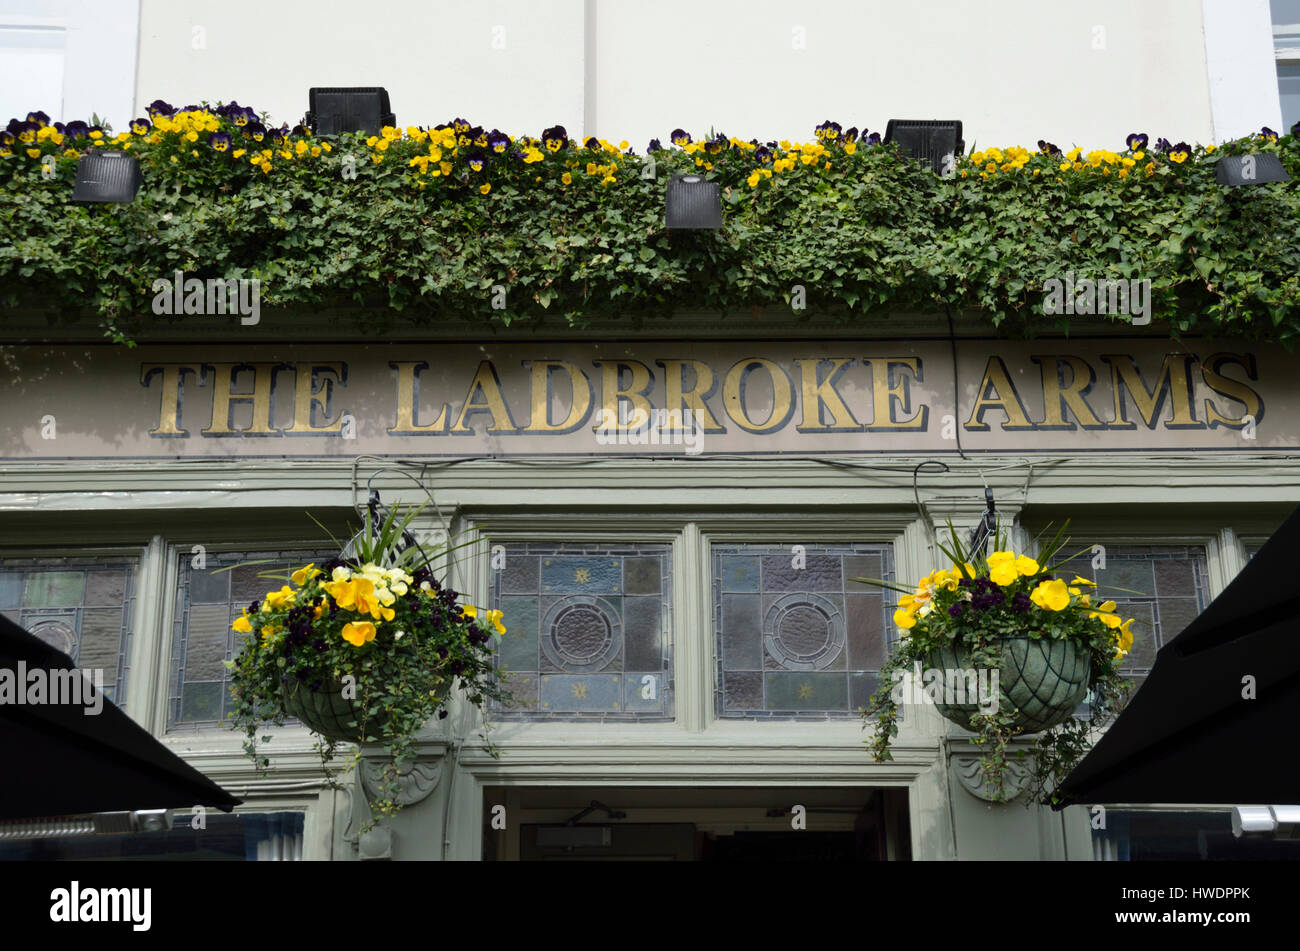 Le bras de Ladbroke Ladbroke Road pub en W11, Notting Hill, Londres, Royaume-Uni. Banque D'Images